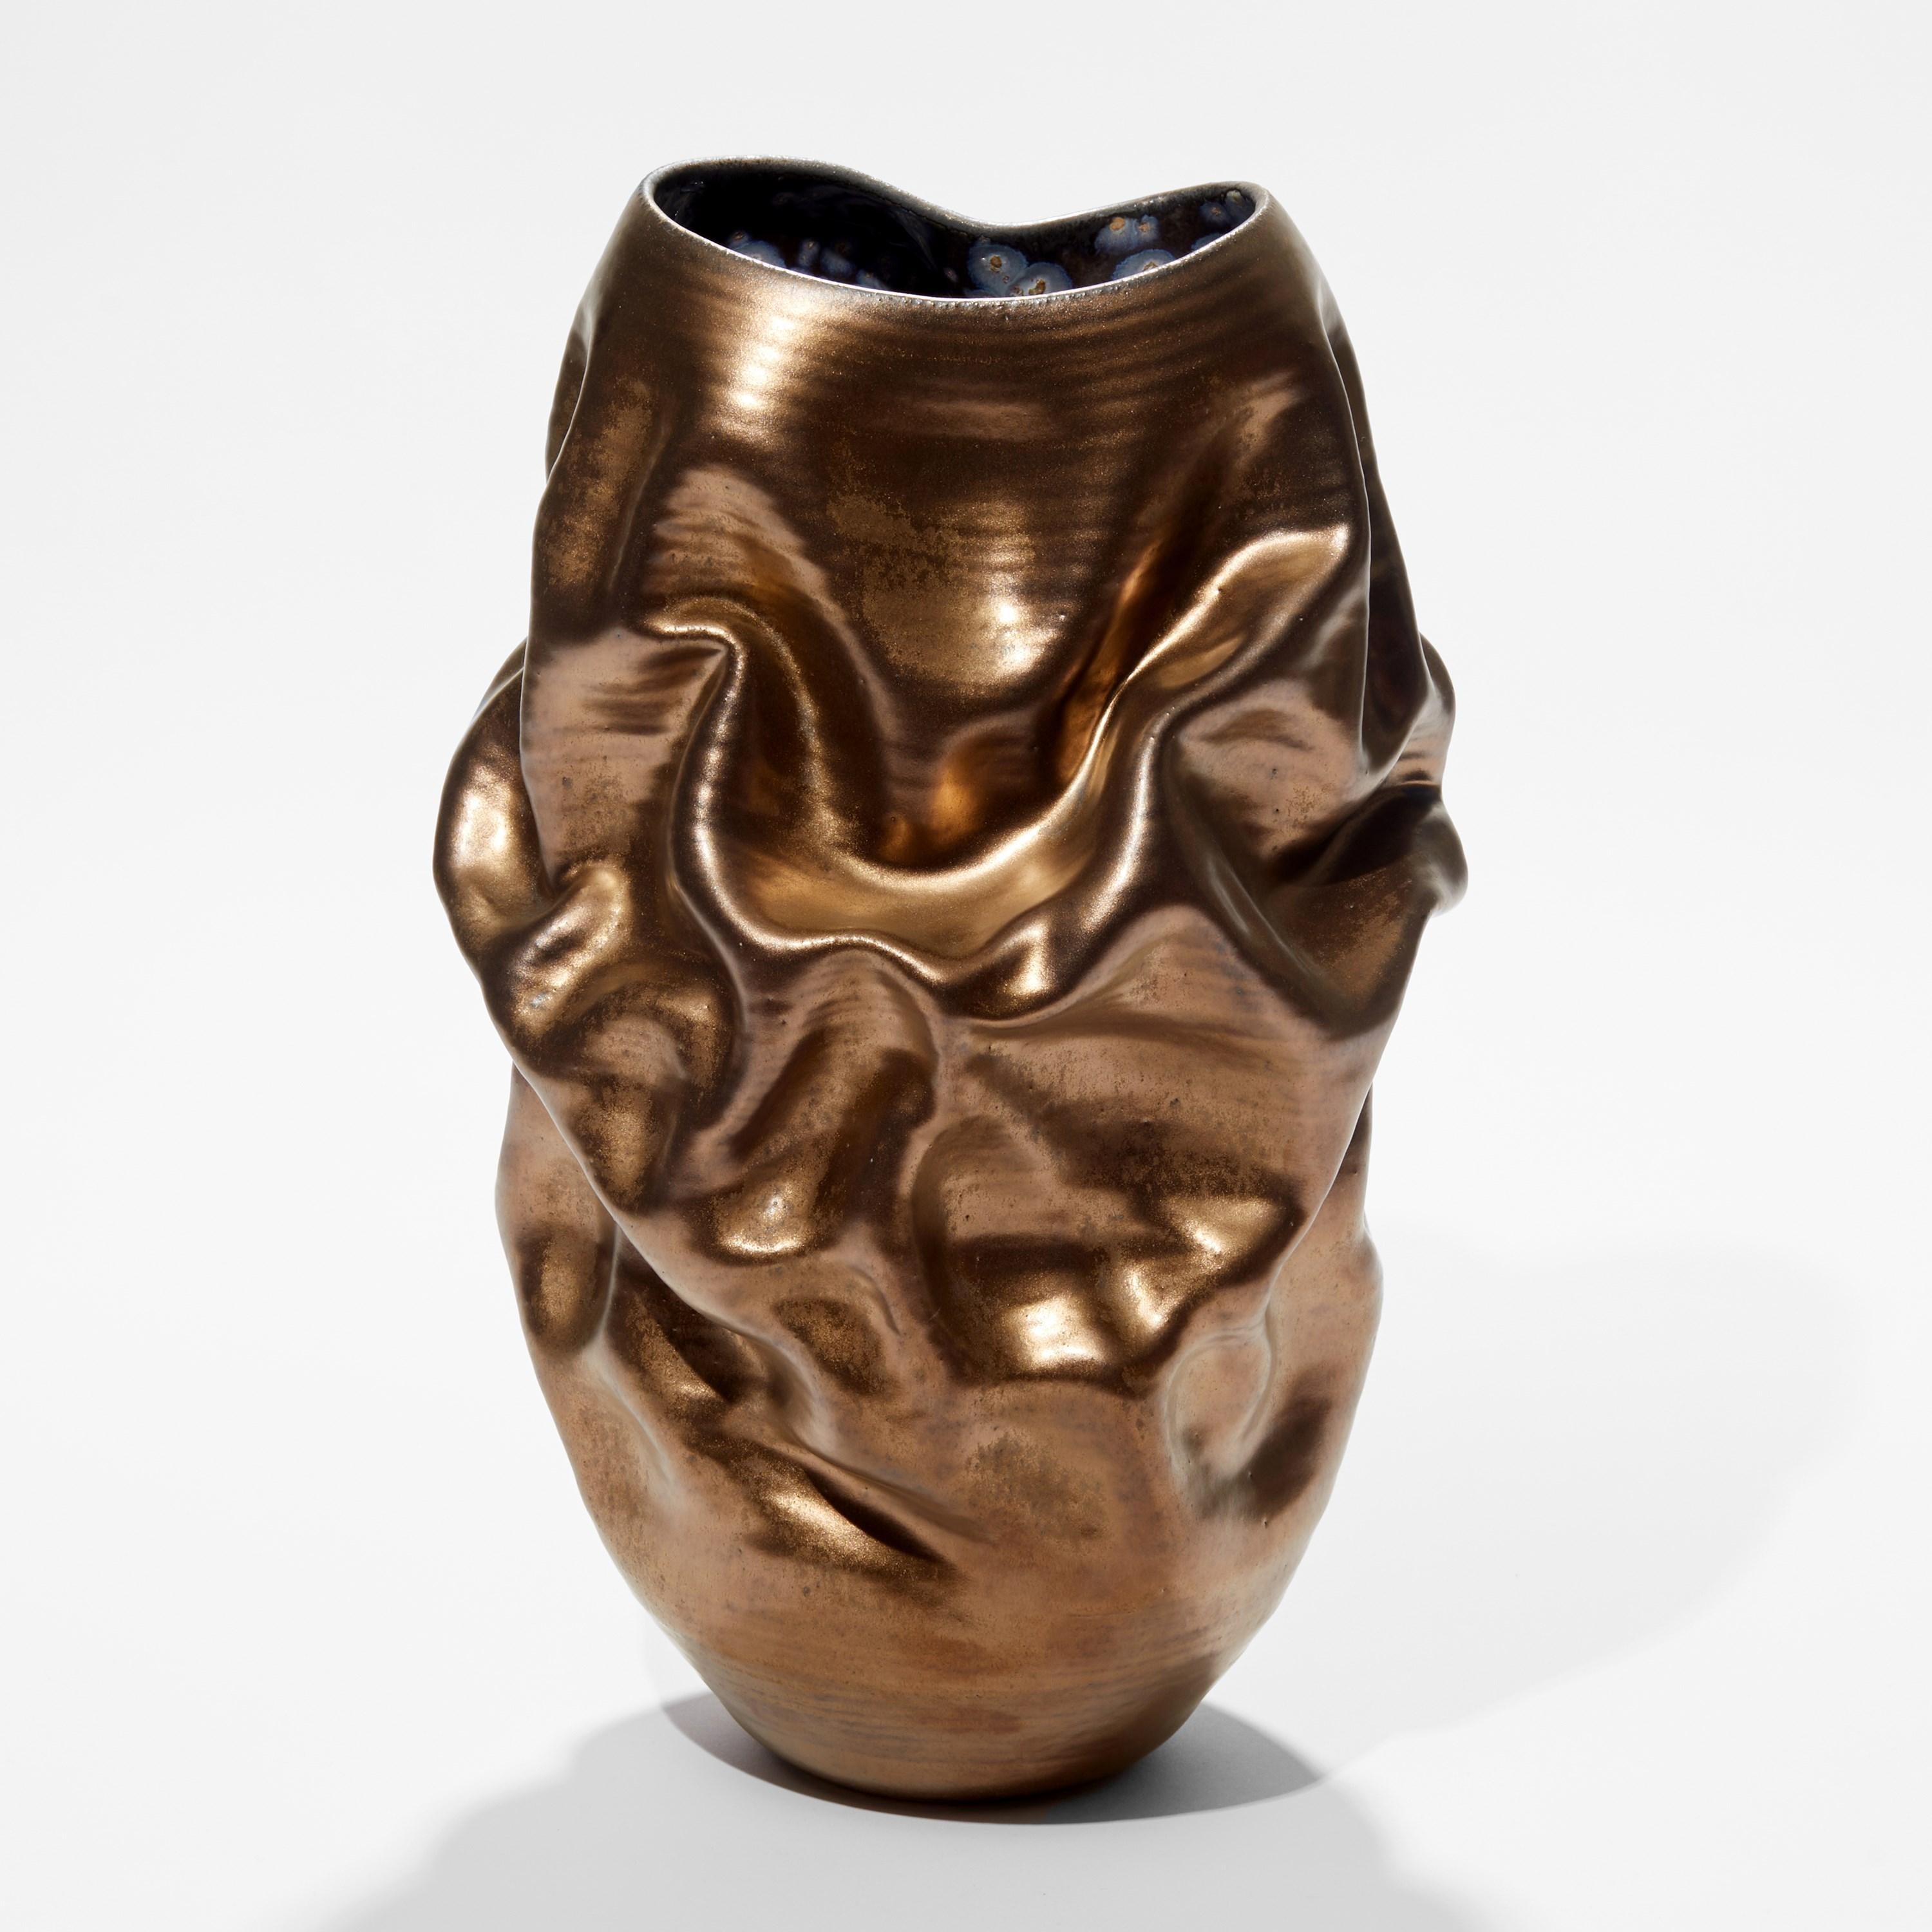 Spanish Tall Gold Crumpled Form No 96, a Ceramic Vessel by Nicholas Arroyave-Portela